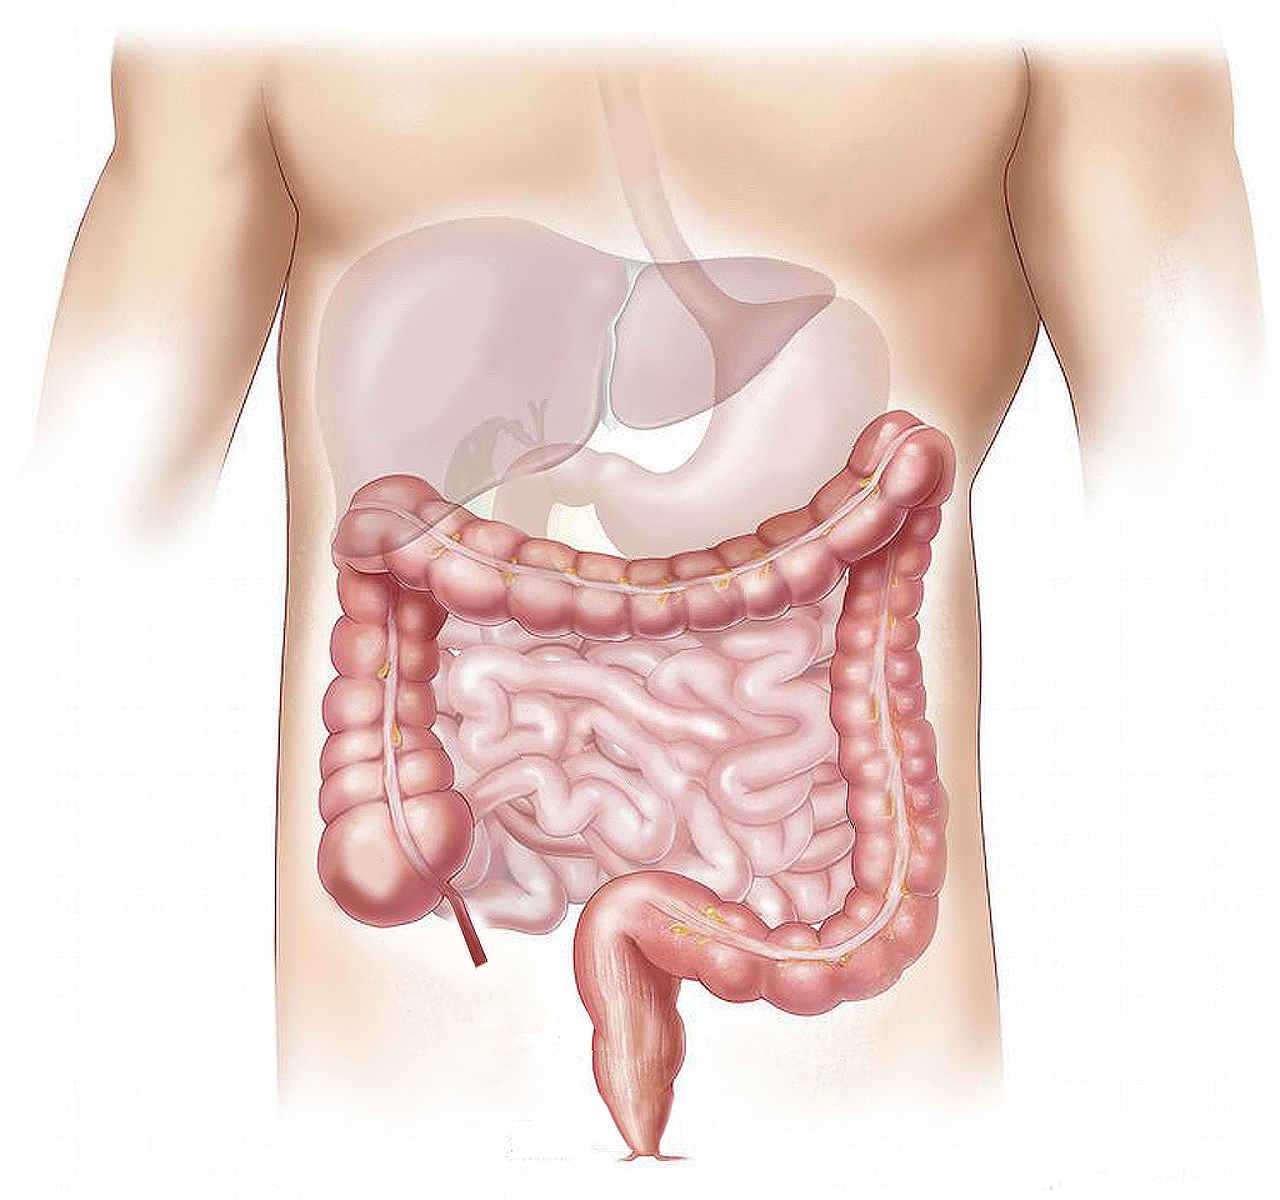 Crohn's Disease: Causes, Symptoms, Diagnosis, and Treatment